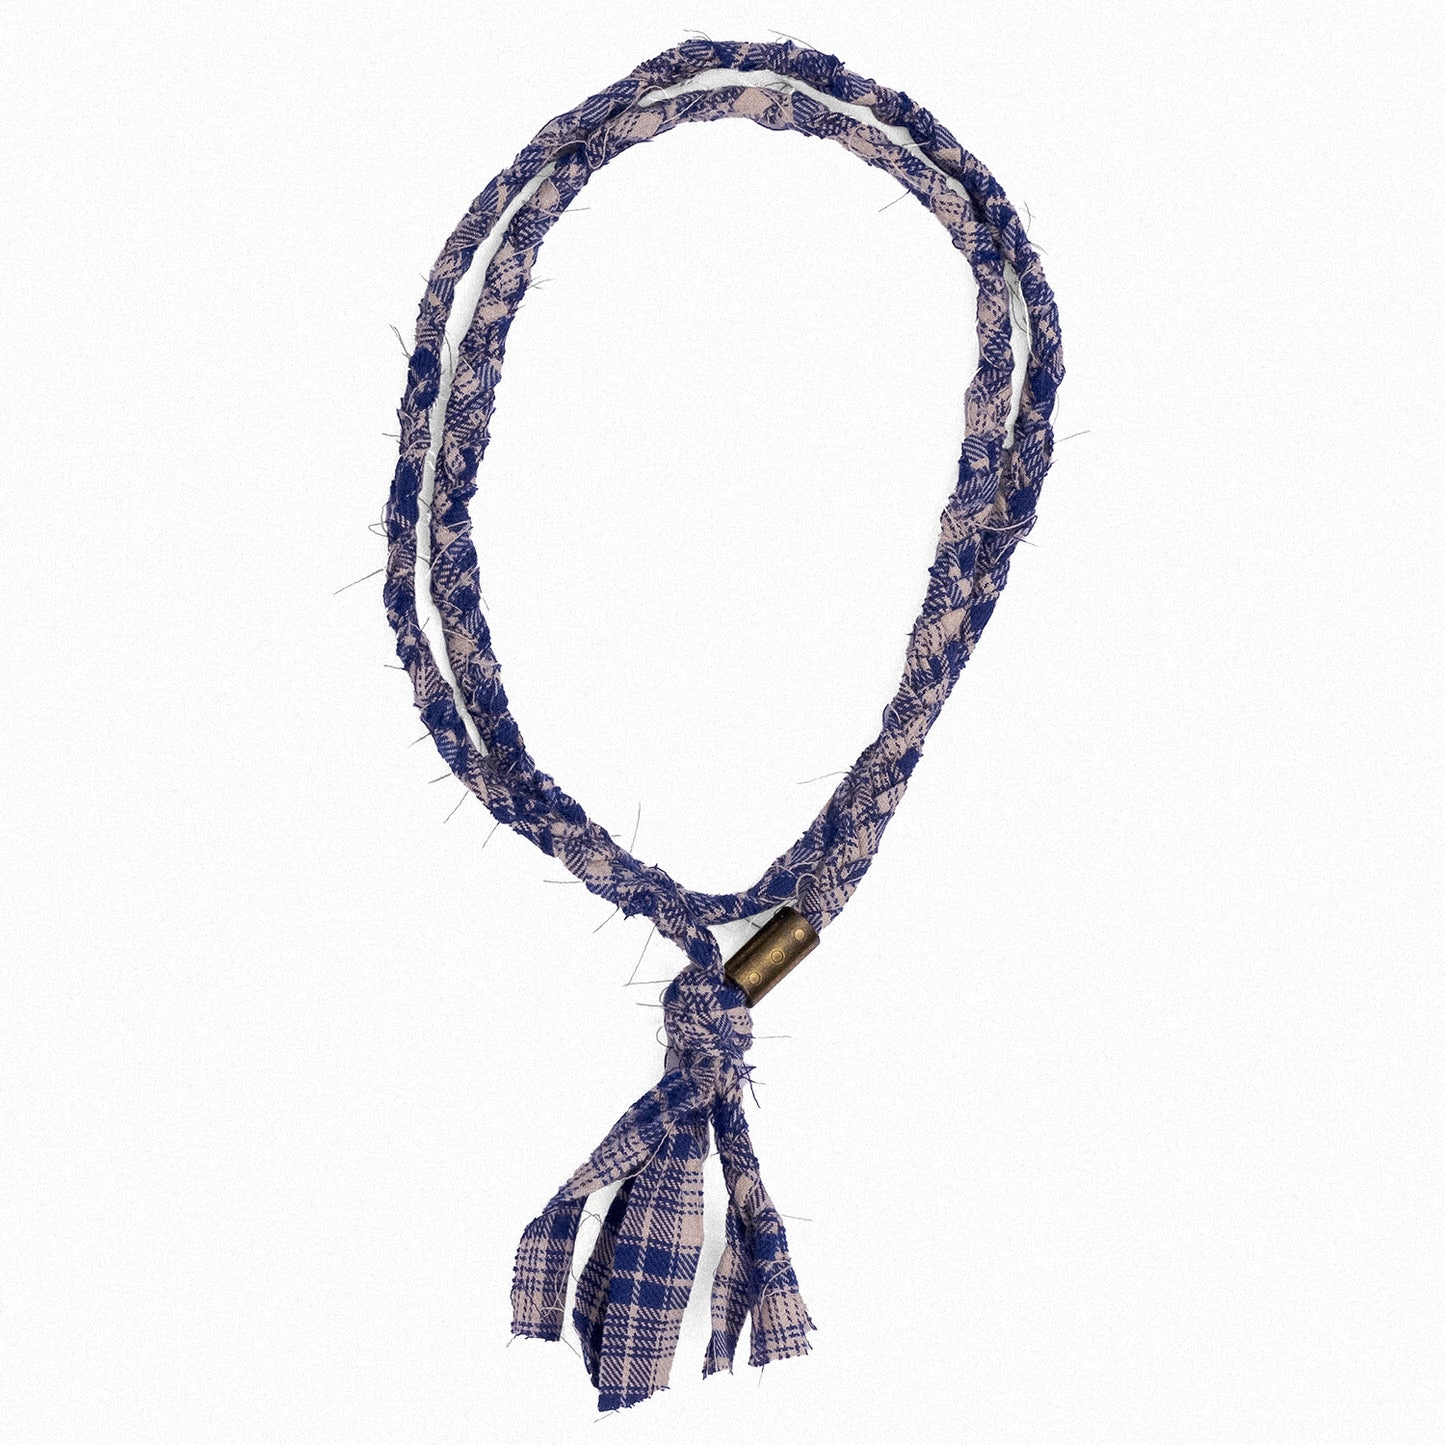 Borali - Irruo braided necklace BC-GR305